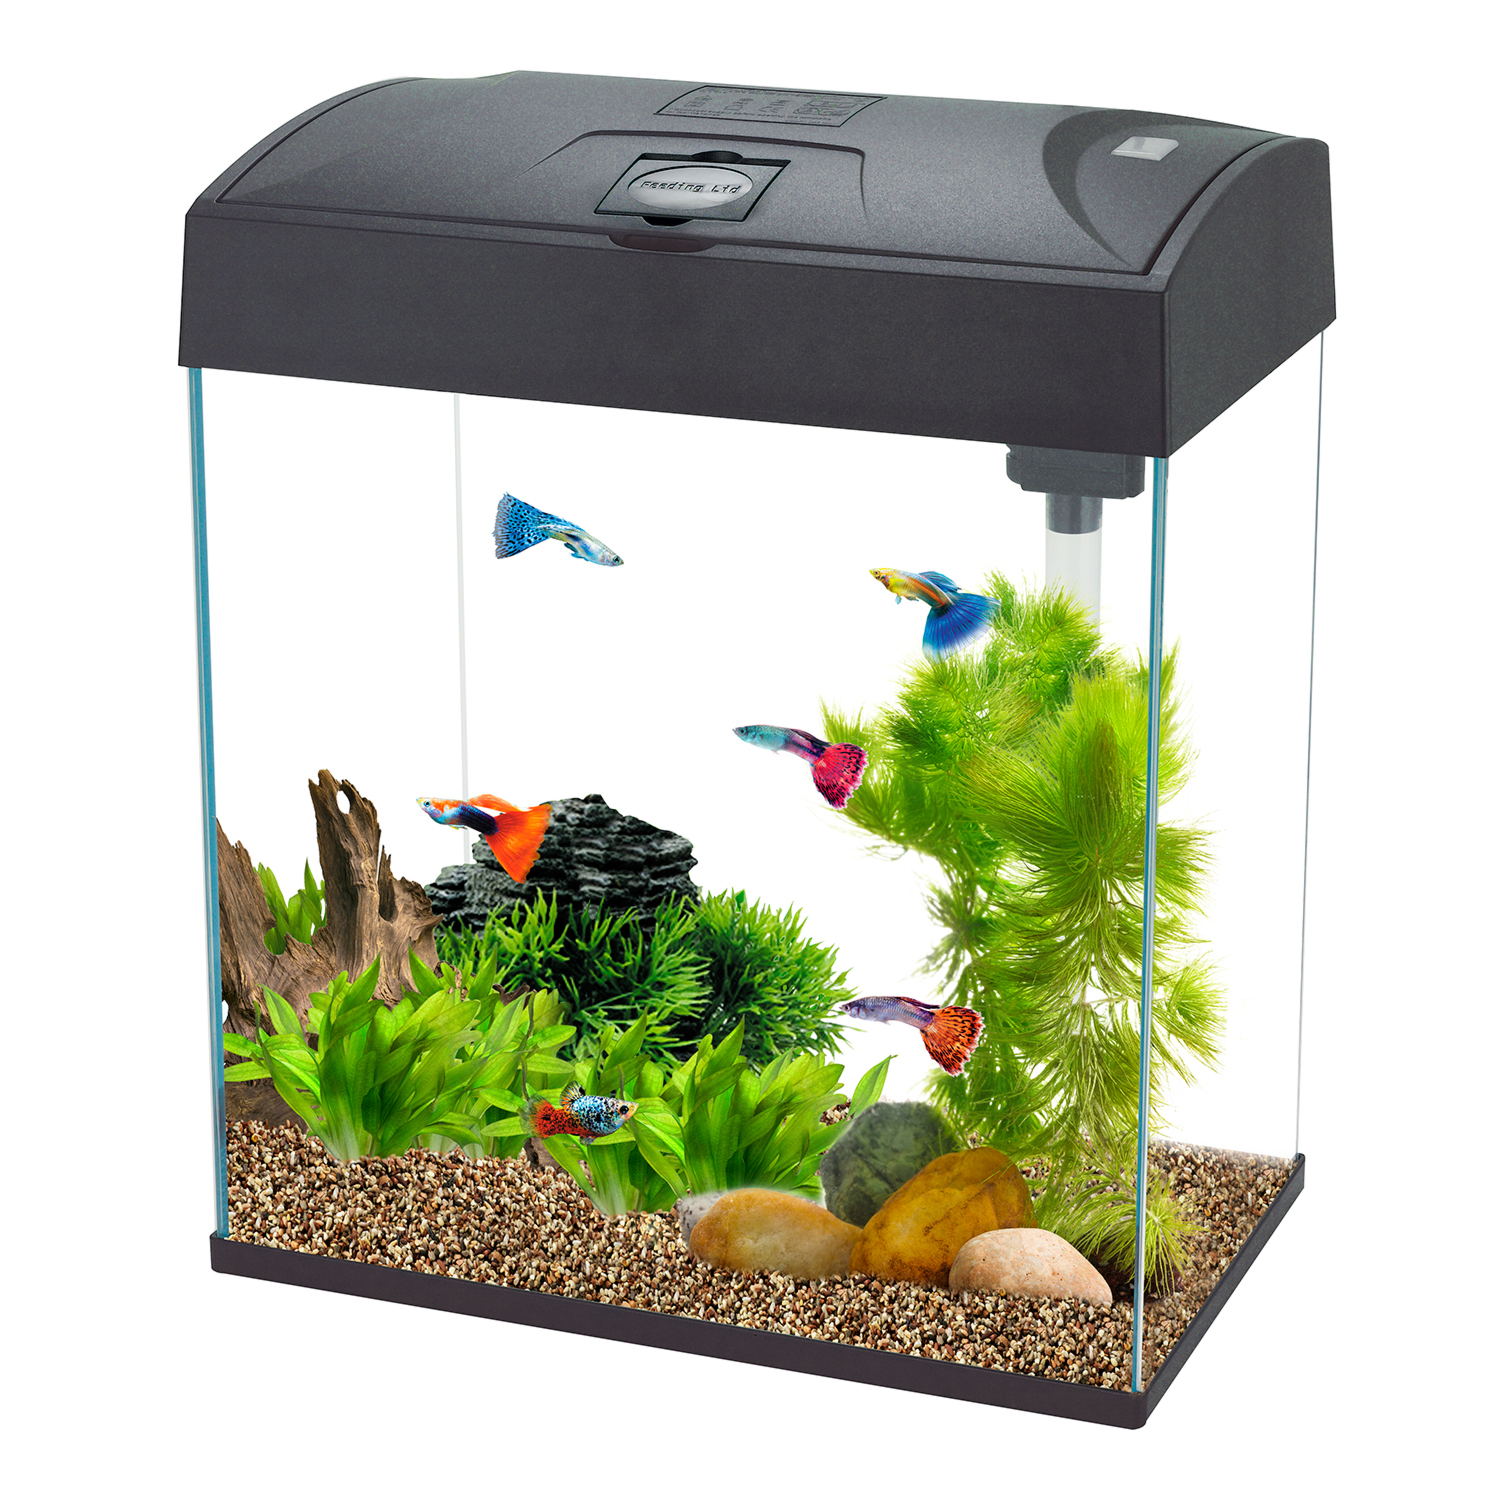 Fish R Fun Black Rectangular LED Fish Tank 28L Image